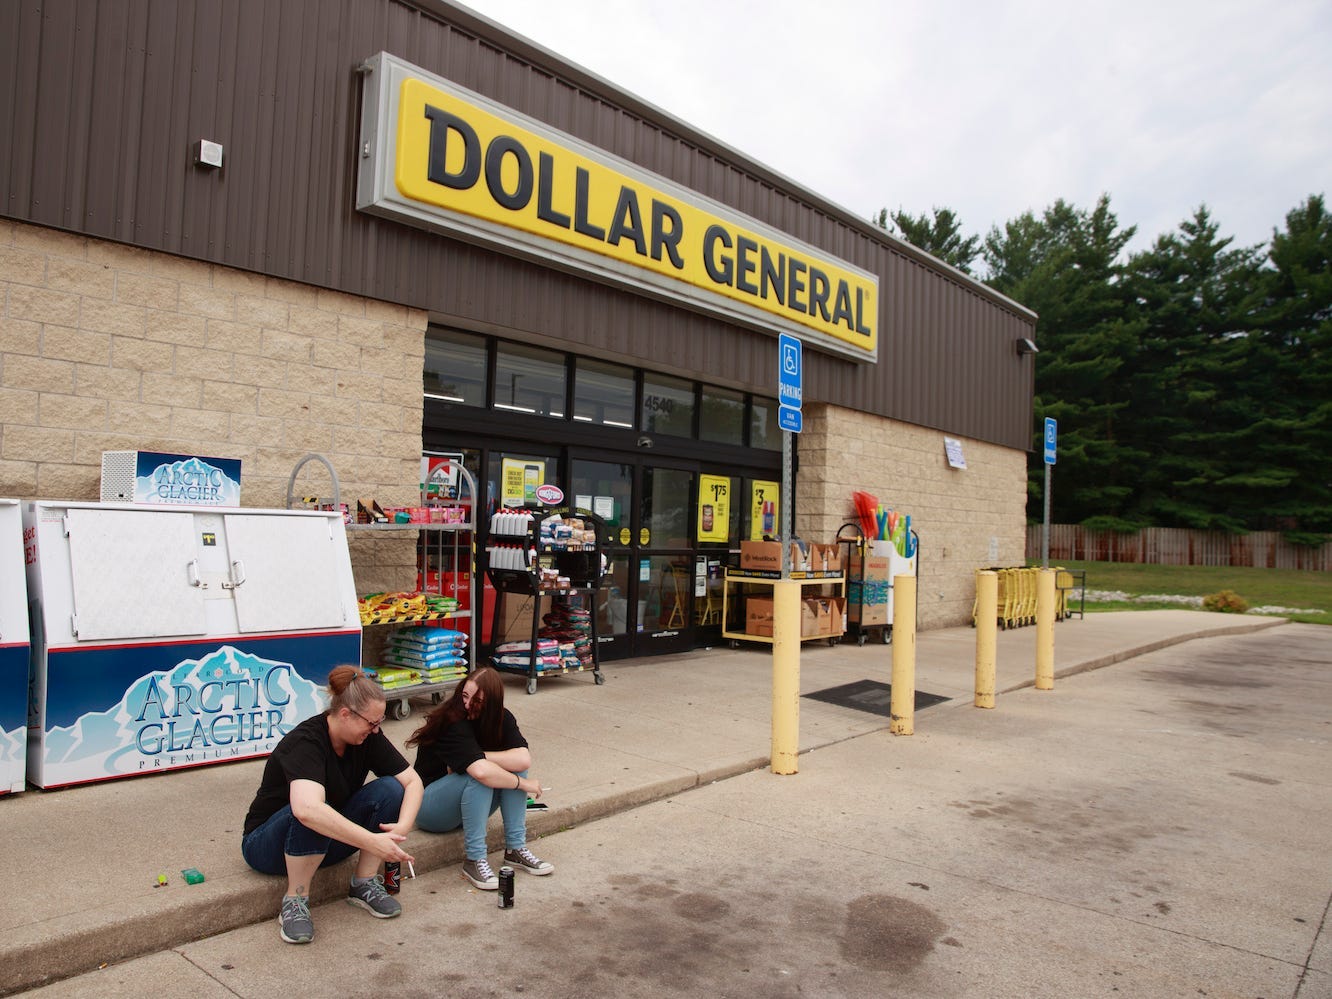 An exterior shot of a Dollar General store